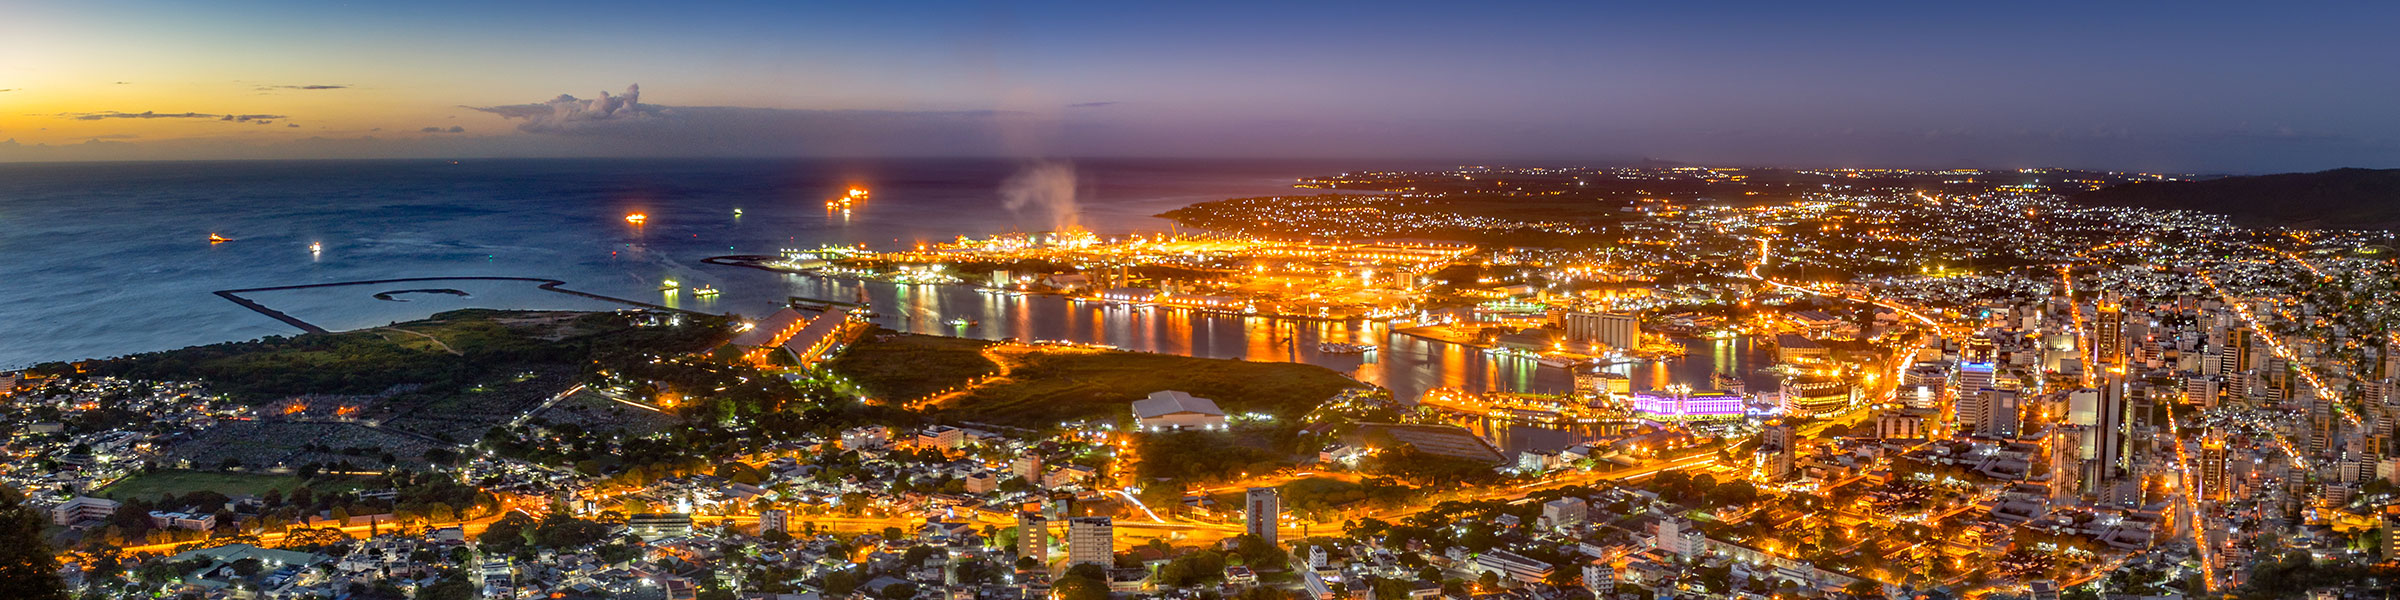 Night panorama of Port-Louis, capital of Mauritius